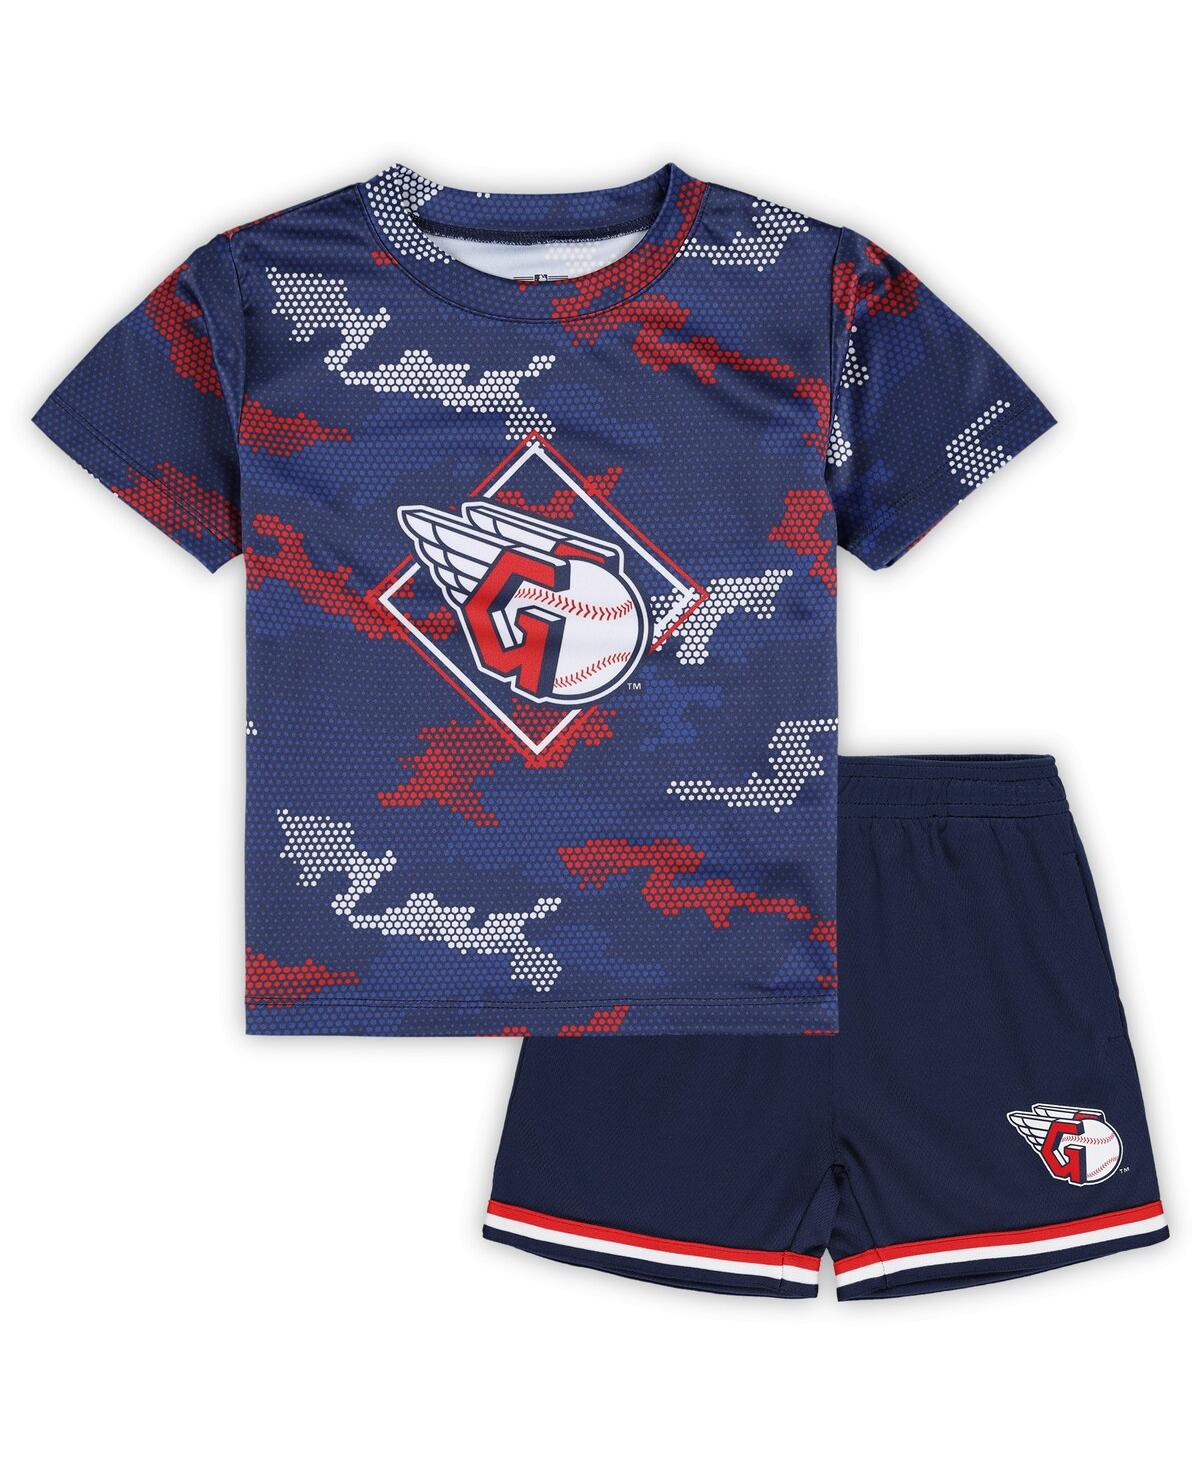 Outerstuff Babies' Toddler Boys And Girls Fanatics Navy Cleveland Guardians Field Ball T-shirt And Shorts Set